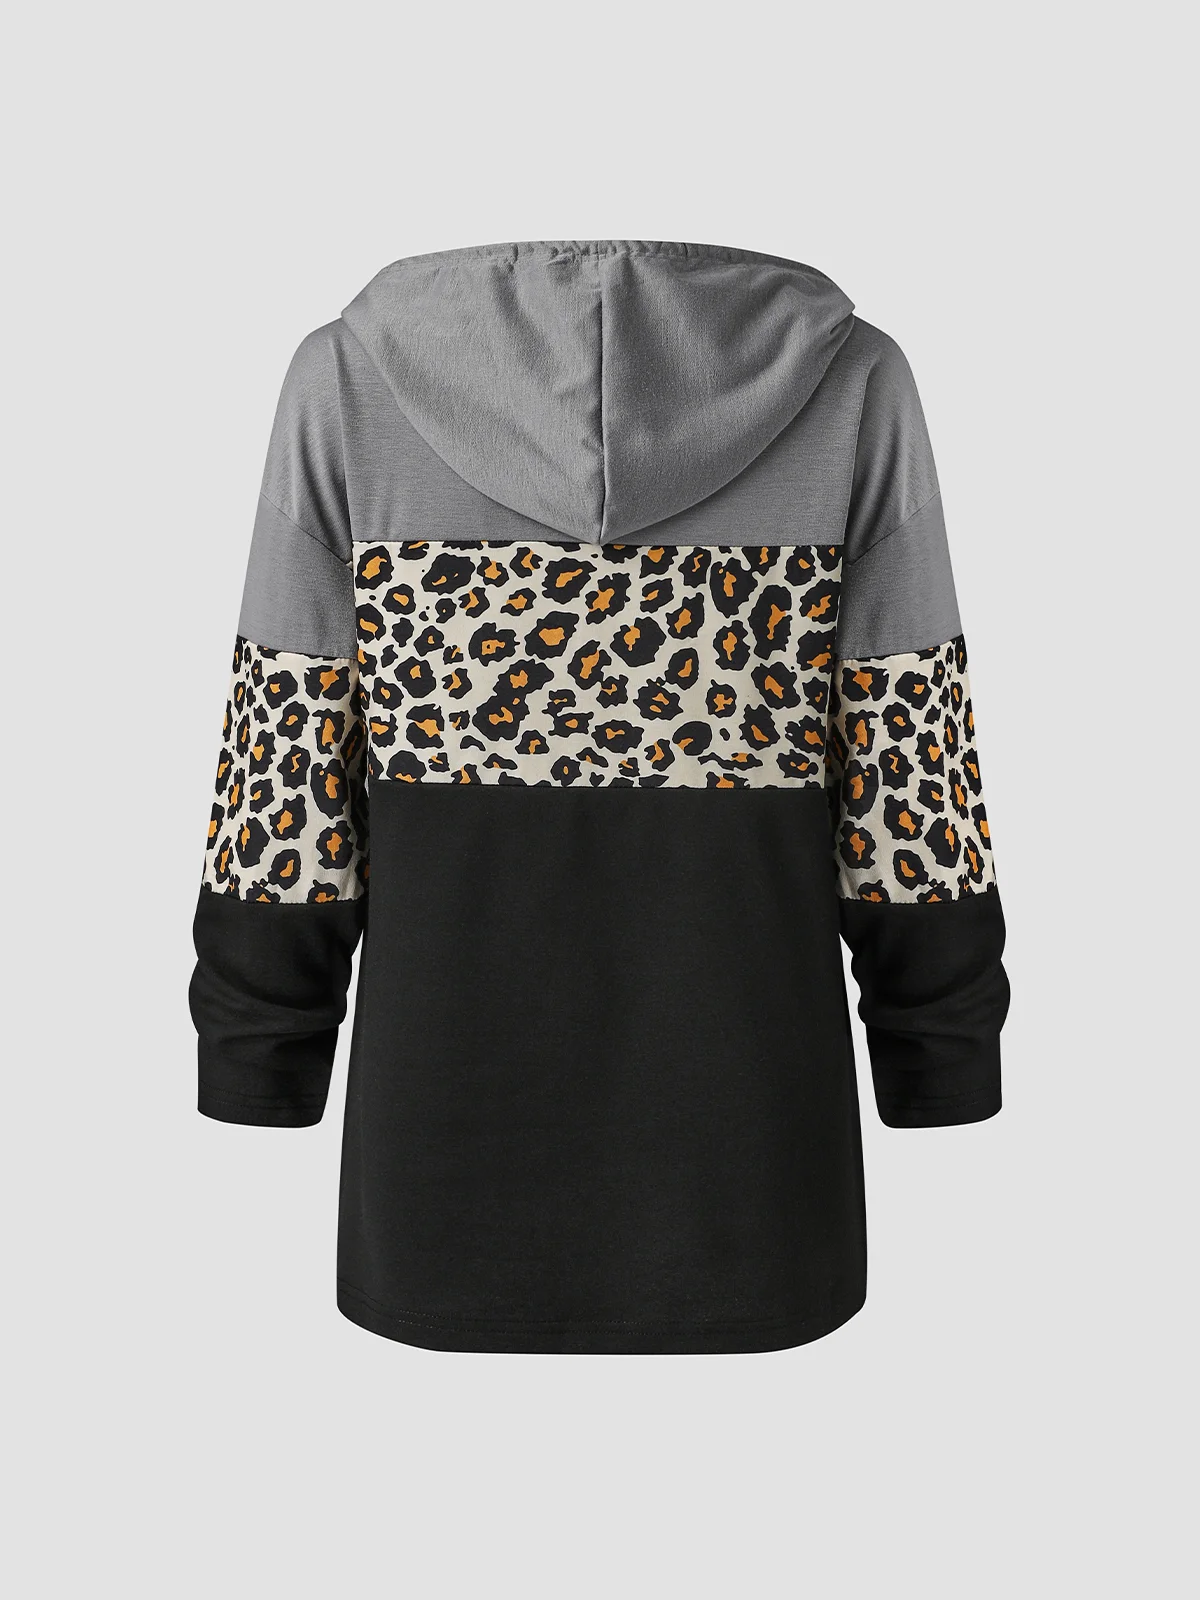 Long sleeve V-neck hooded zipper geometric stitched leopard top women's sweater